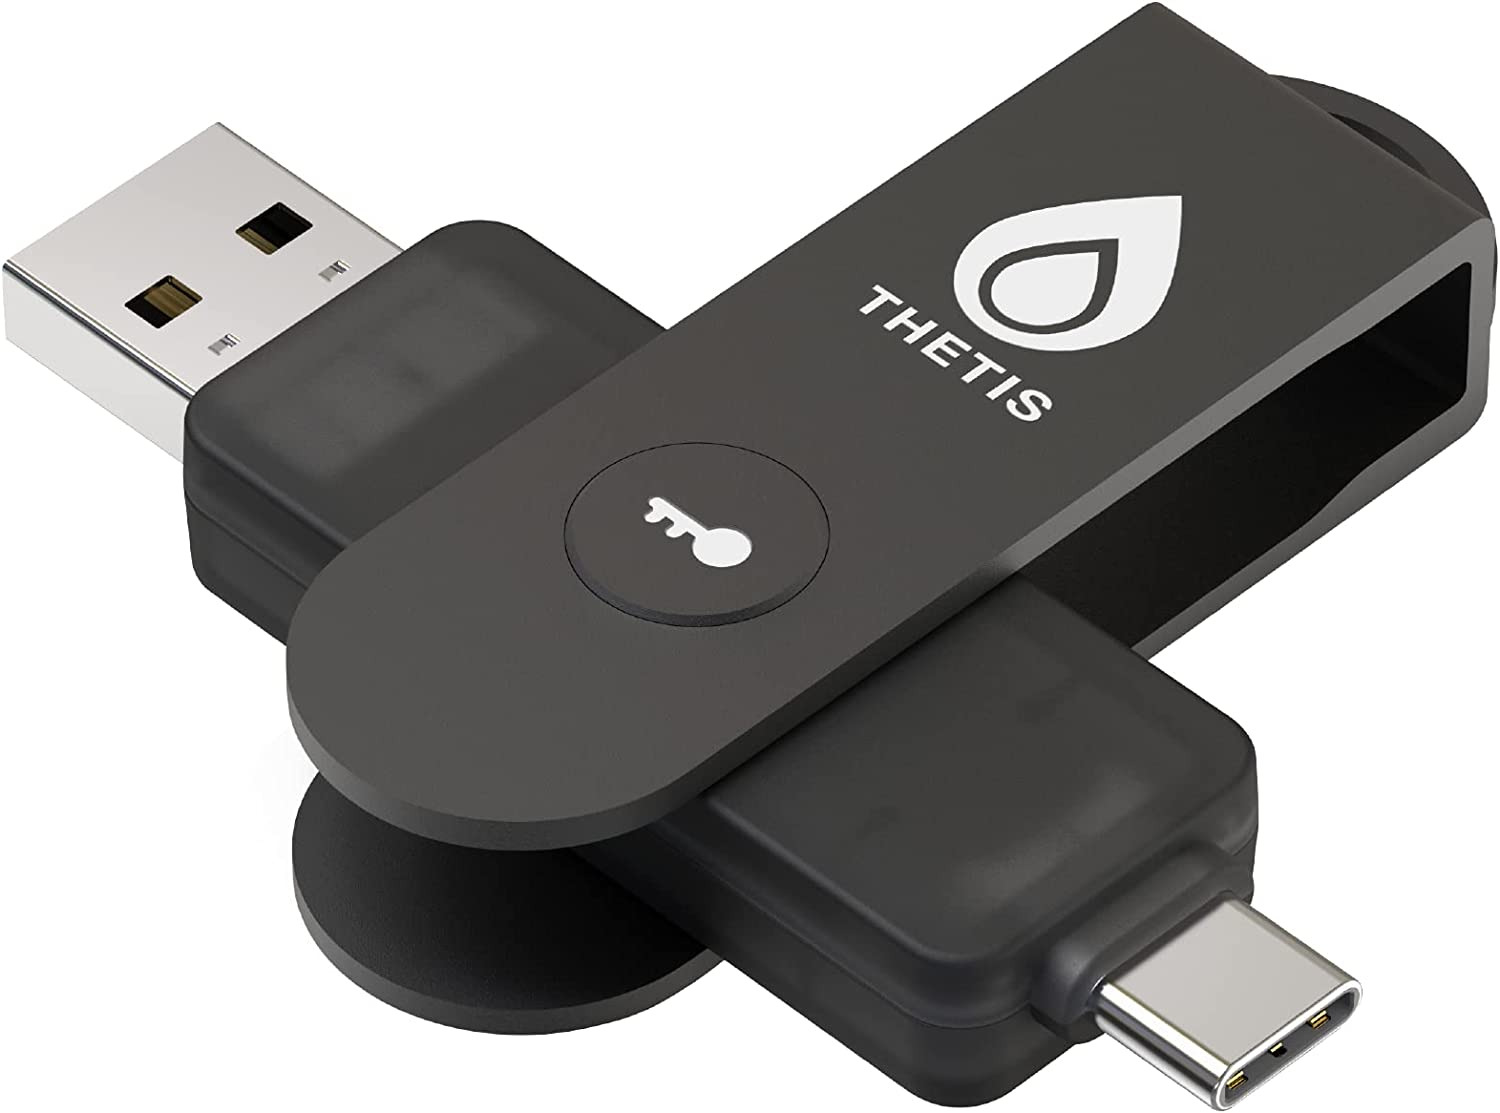 Pro FIDO2 Security Key, Two-Factor Authentication NFC Security Key, Dual USB Por